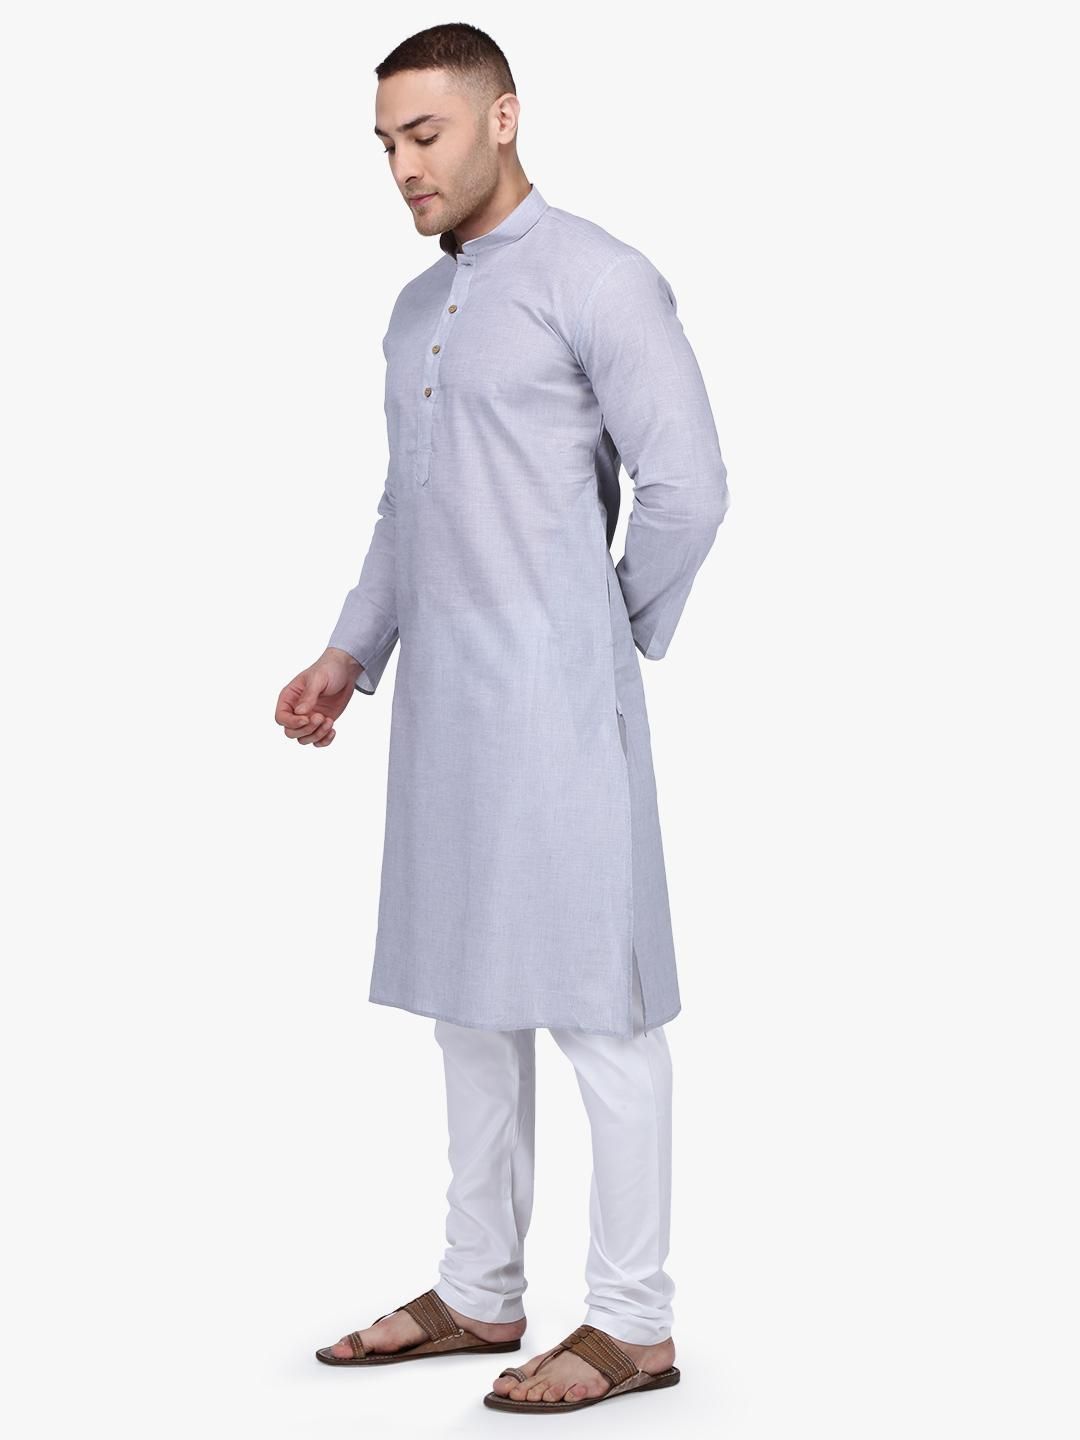 Lava Grey Slim Fit Handloom Cotton Kurta for Men Online Color Grey ...